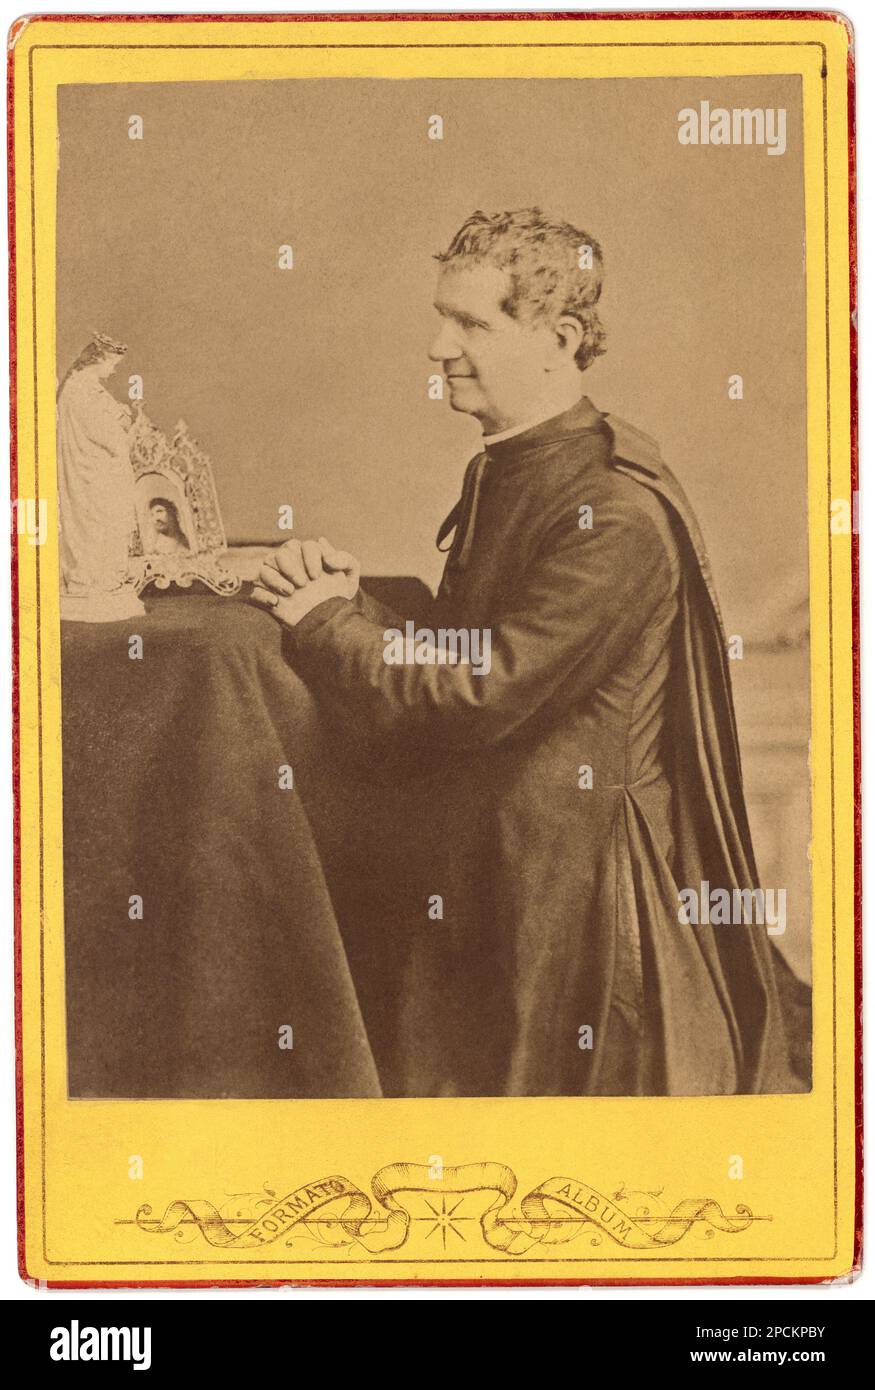 Der italienische Saint Don GIOVANNI BOSCO ( 1815 - 1888 )- SANTO - san - Sant - RELIGIONE CATTOLICA - KATHOLISCHE RELIGION - gesegnet - Kragen - colletto - Prelato - prete - Priester - Portrait - Rituto - römisch-katholische Kirche - Gebete - Preghiera - beten - mani giunte - profilo -- - Archivio GBB Stockfoto